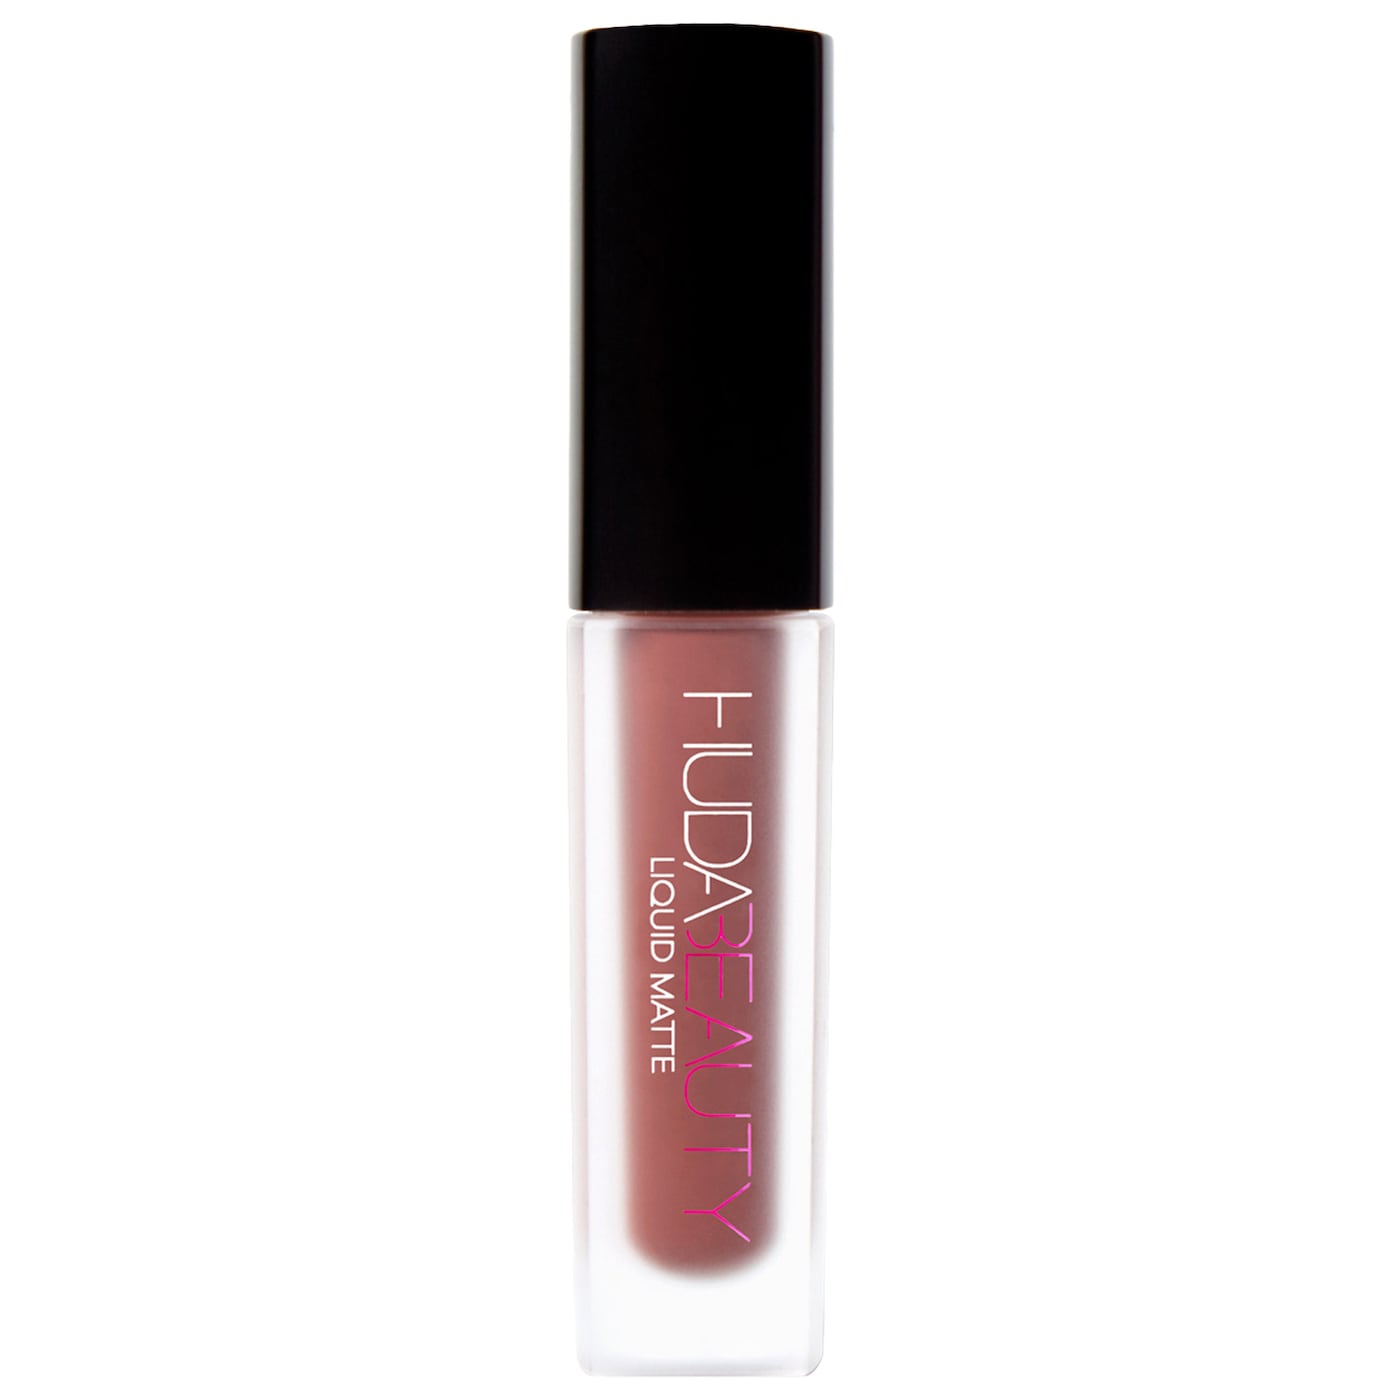 Liquid Matte Lipstick in shade First Class Trial Size - 1.9 ml